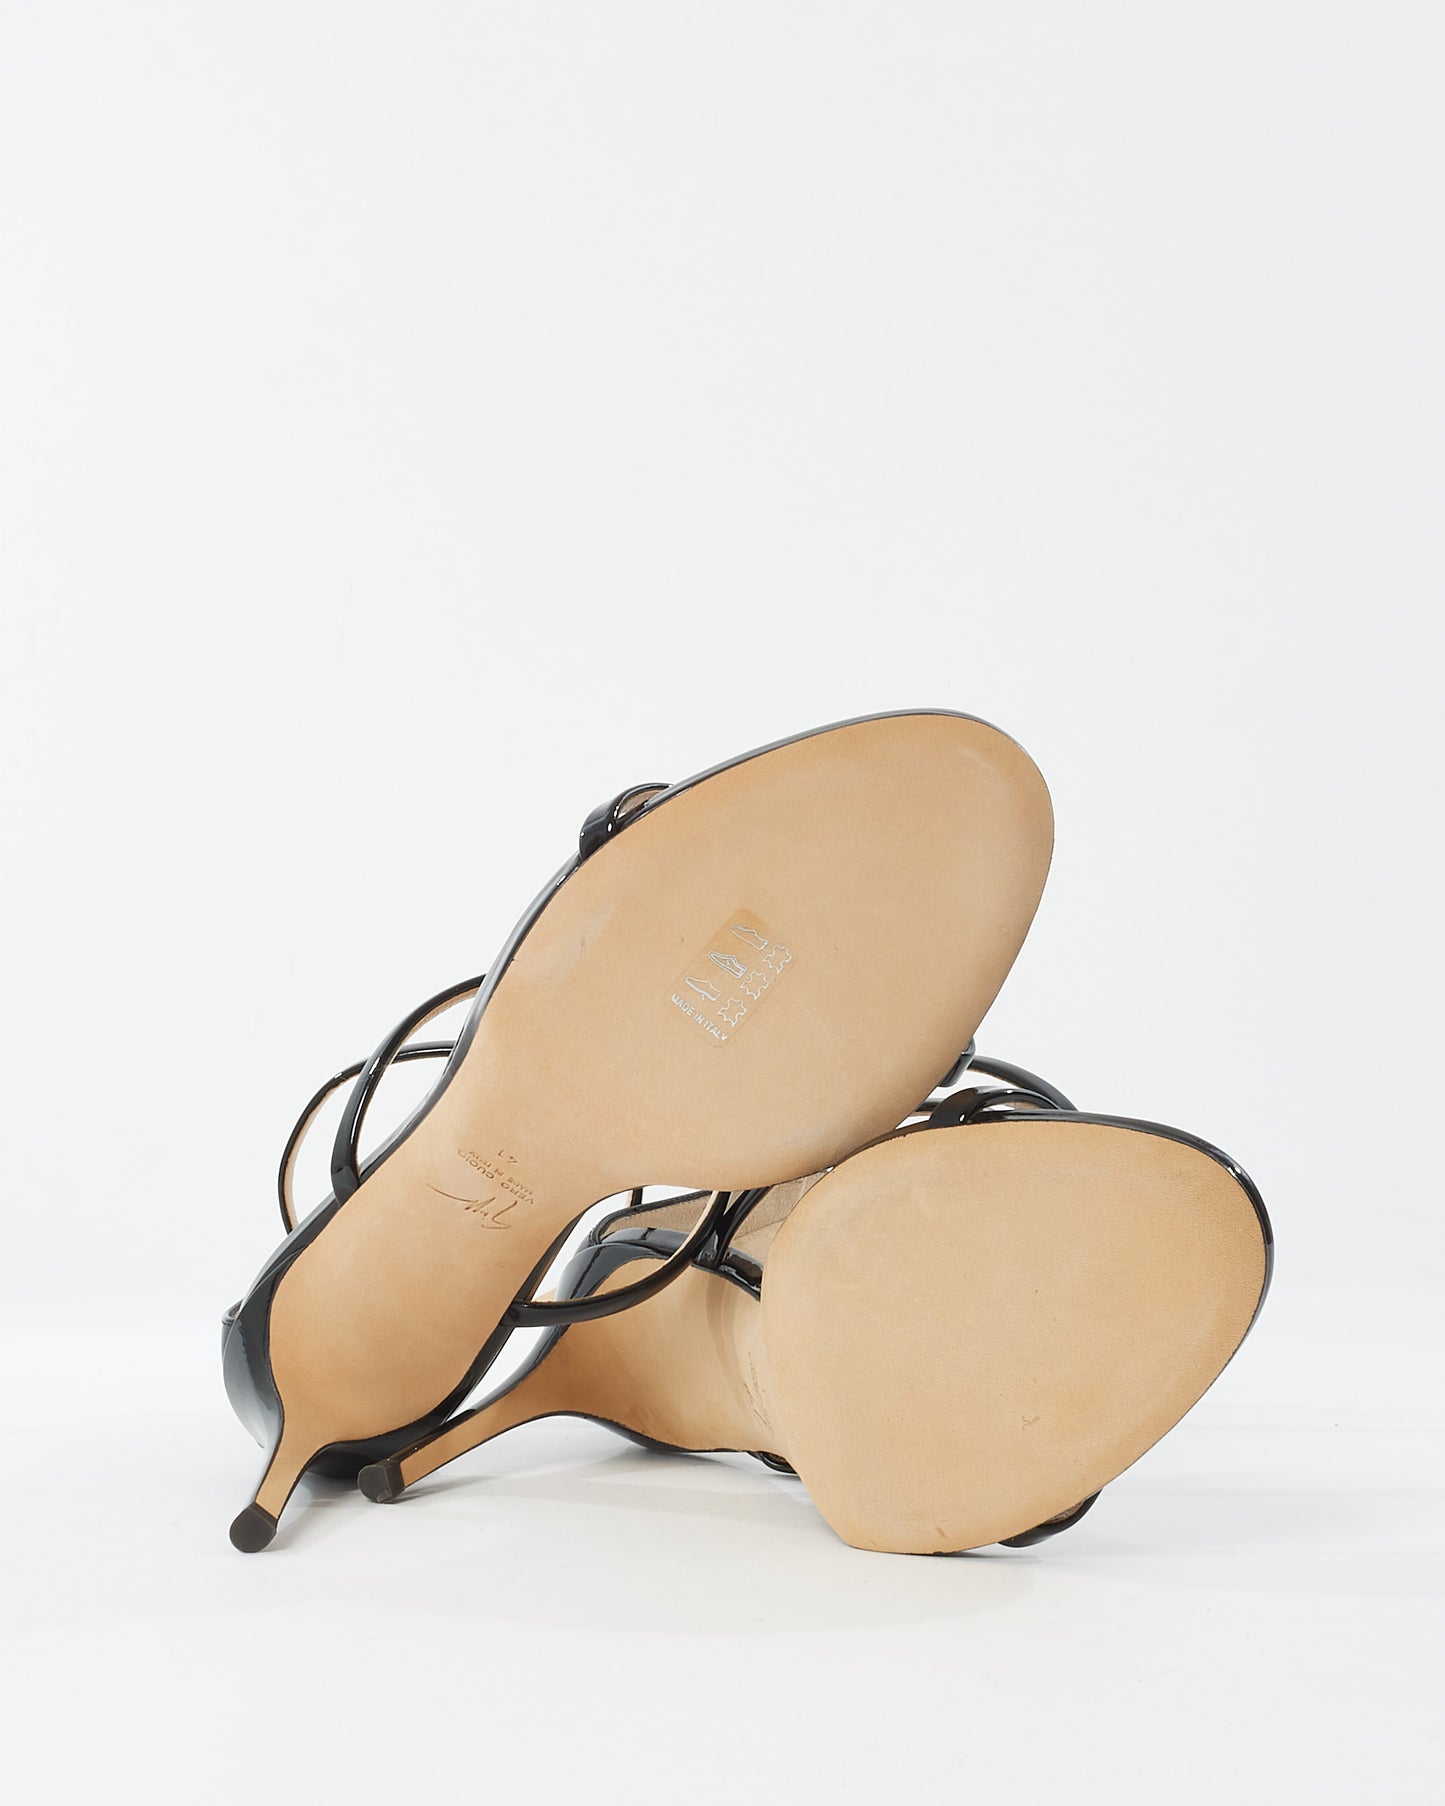 Giuseppe Zanotti Black Patent Leather Harmony Sandals - 41